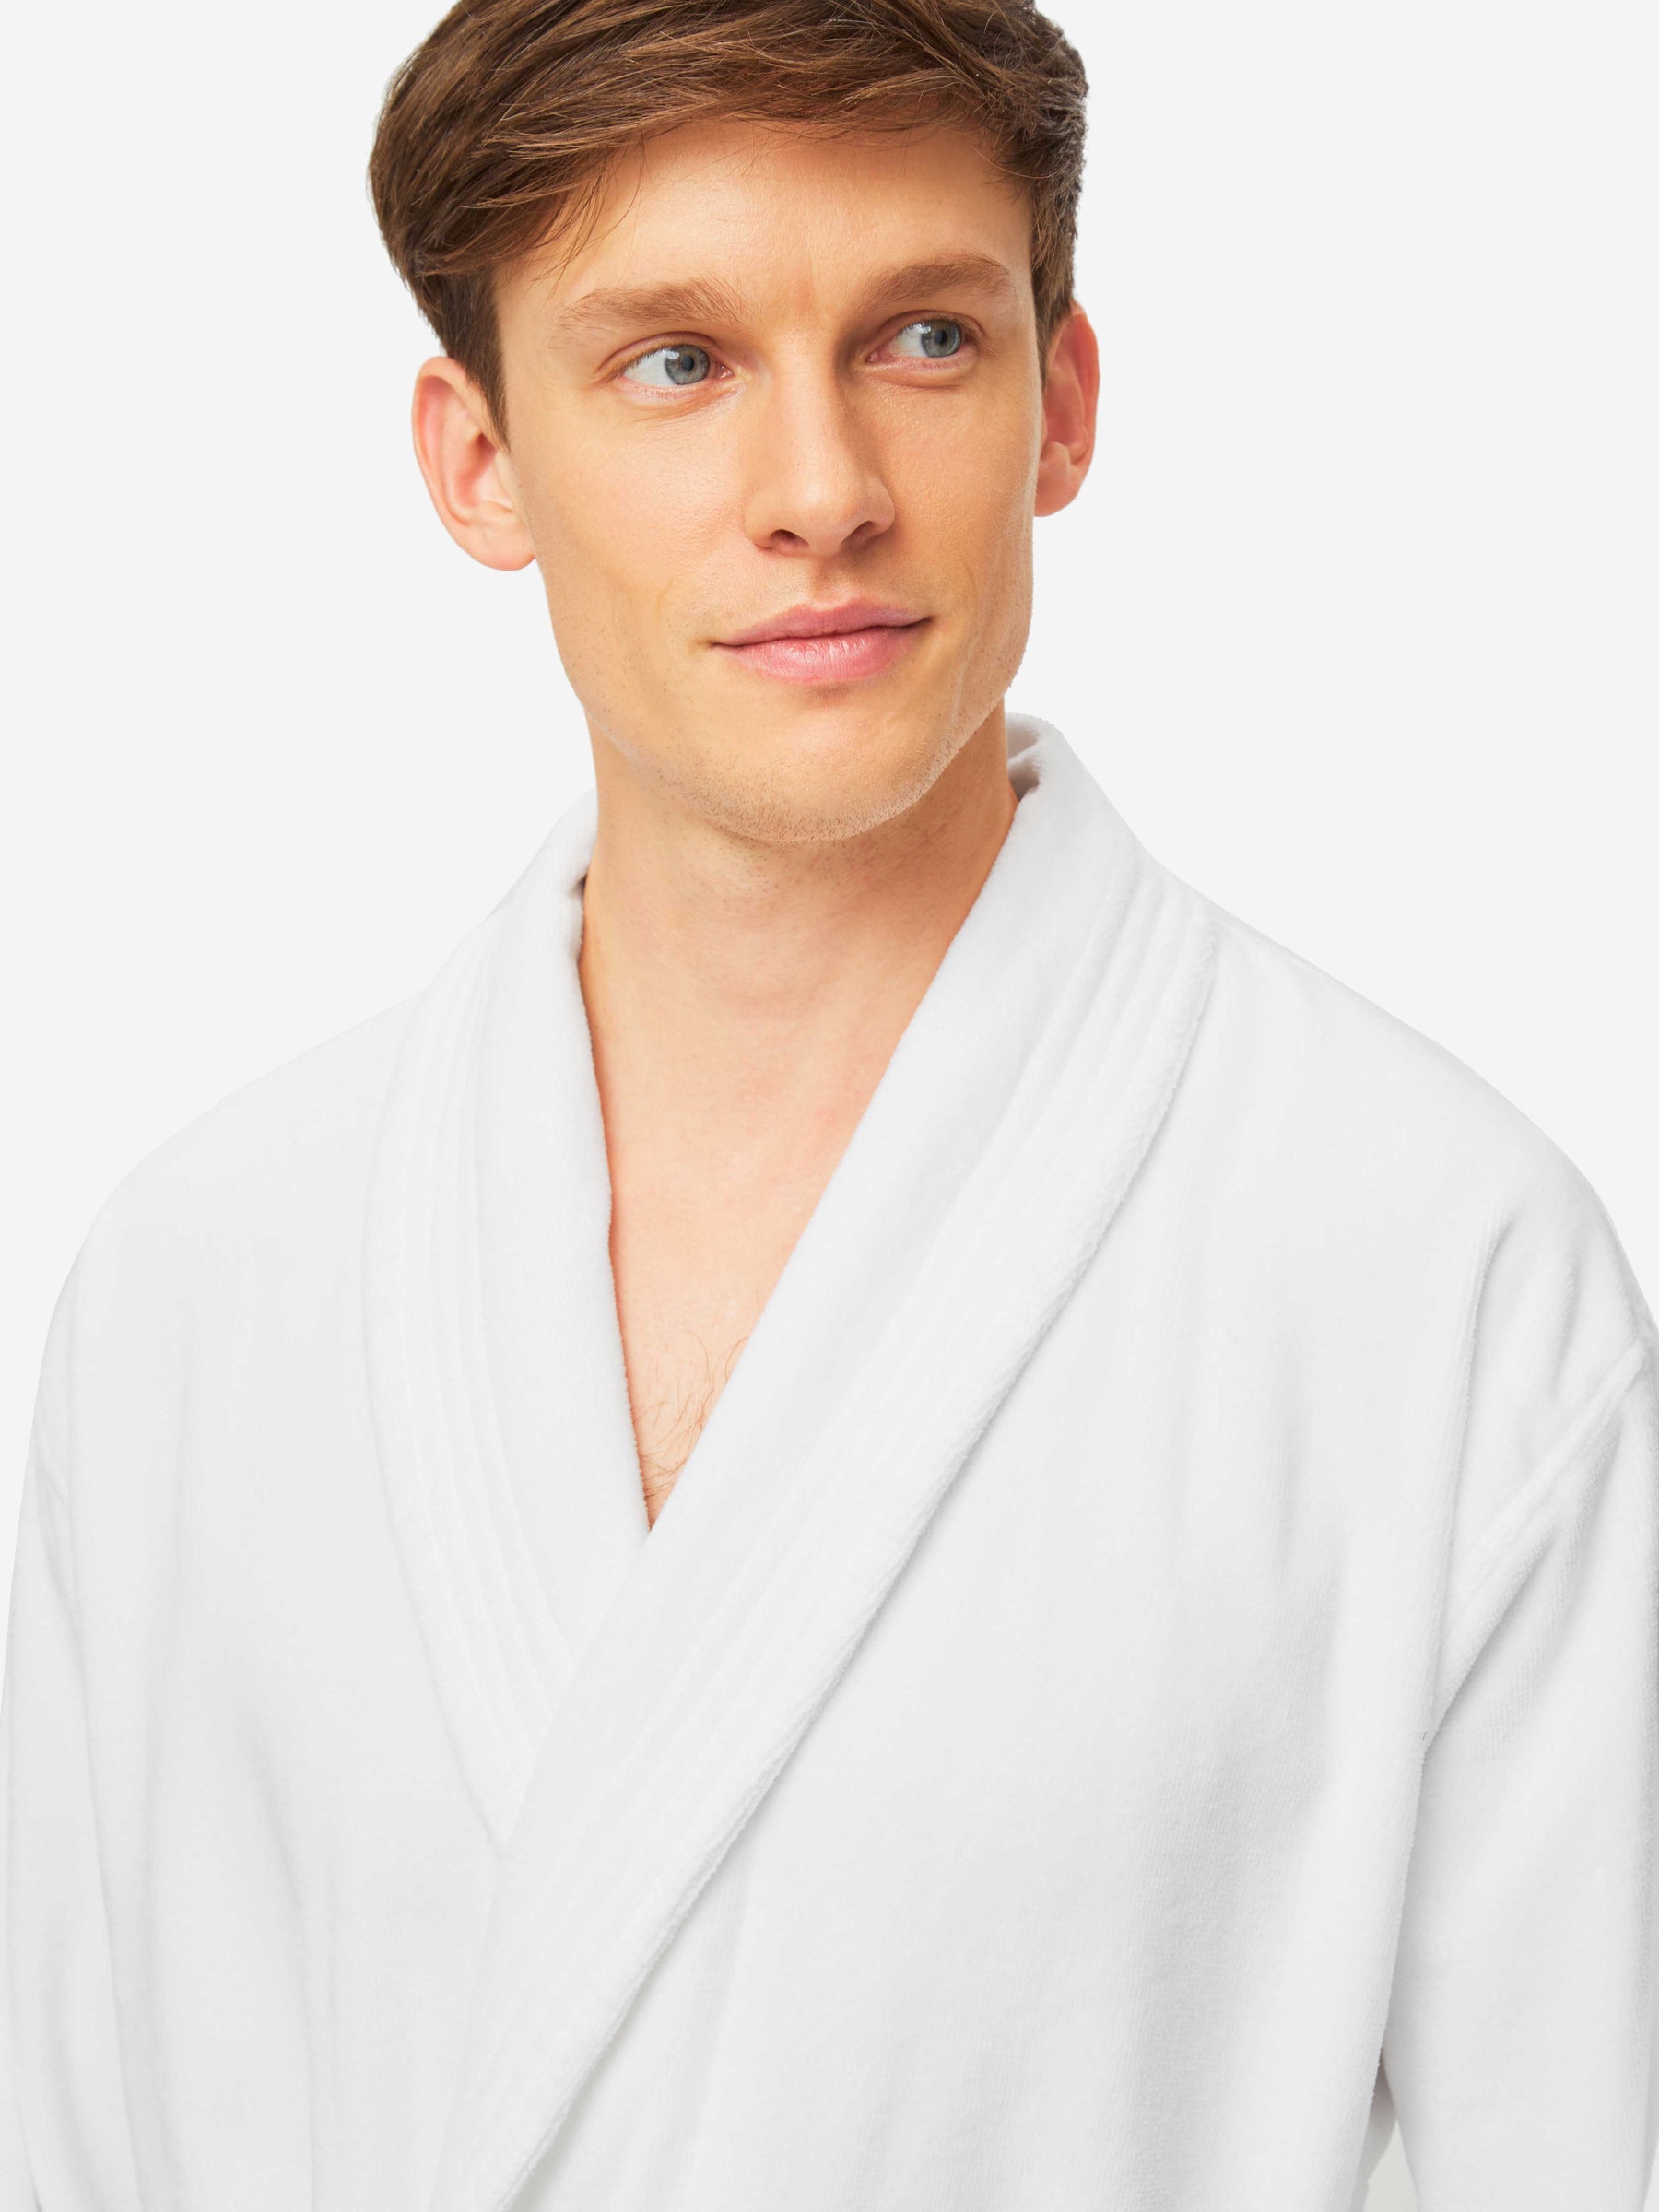 100% Cotton Men White Terry Velour Cloth Body Wrap, Bath Towel Wrap